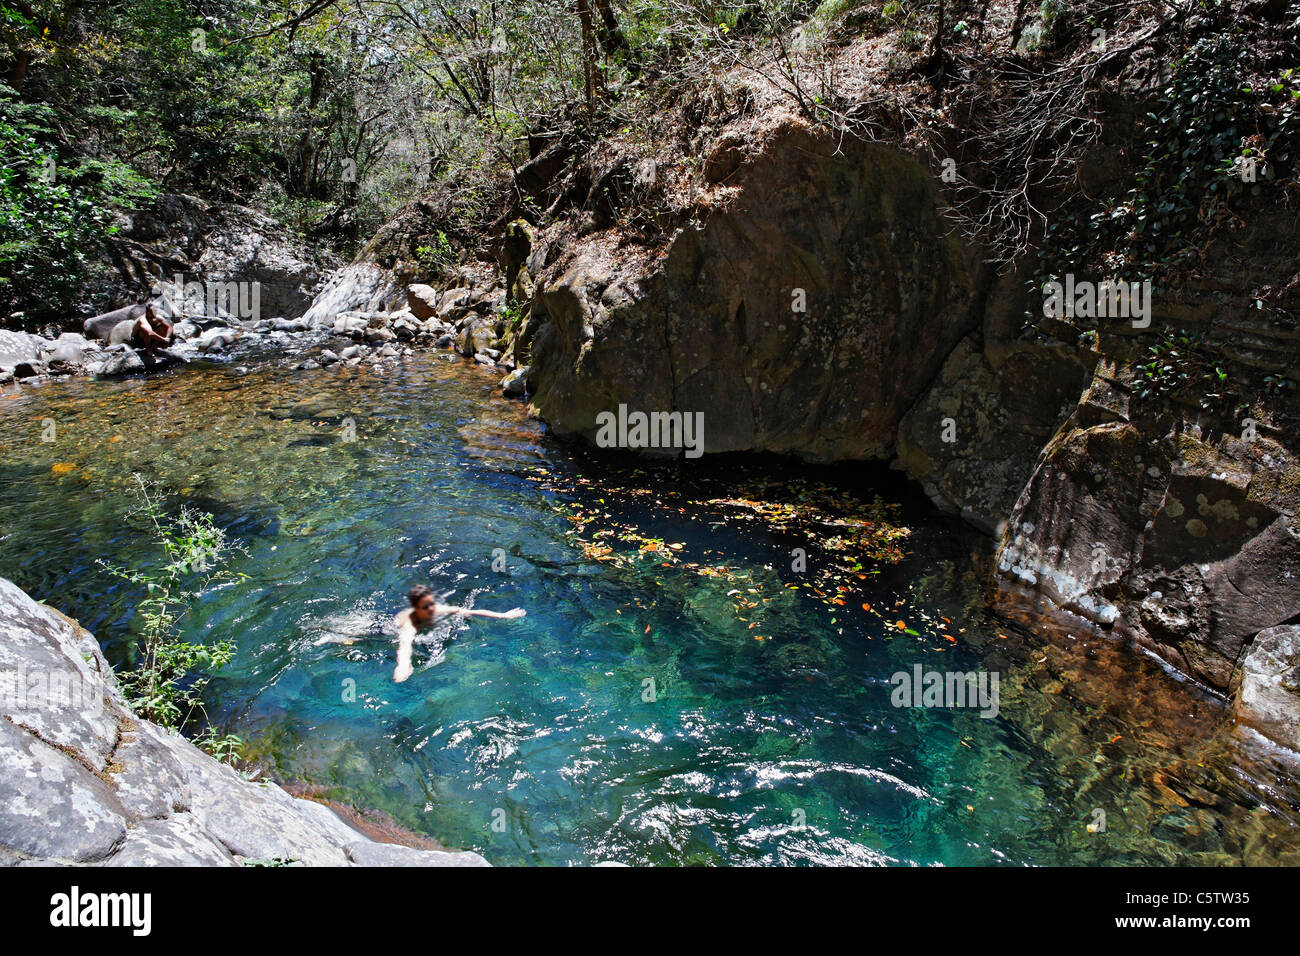 Costa Rica, Guanacaste, Rincon de la Vieja National Park, Tourists bathing in stream Stock Photo